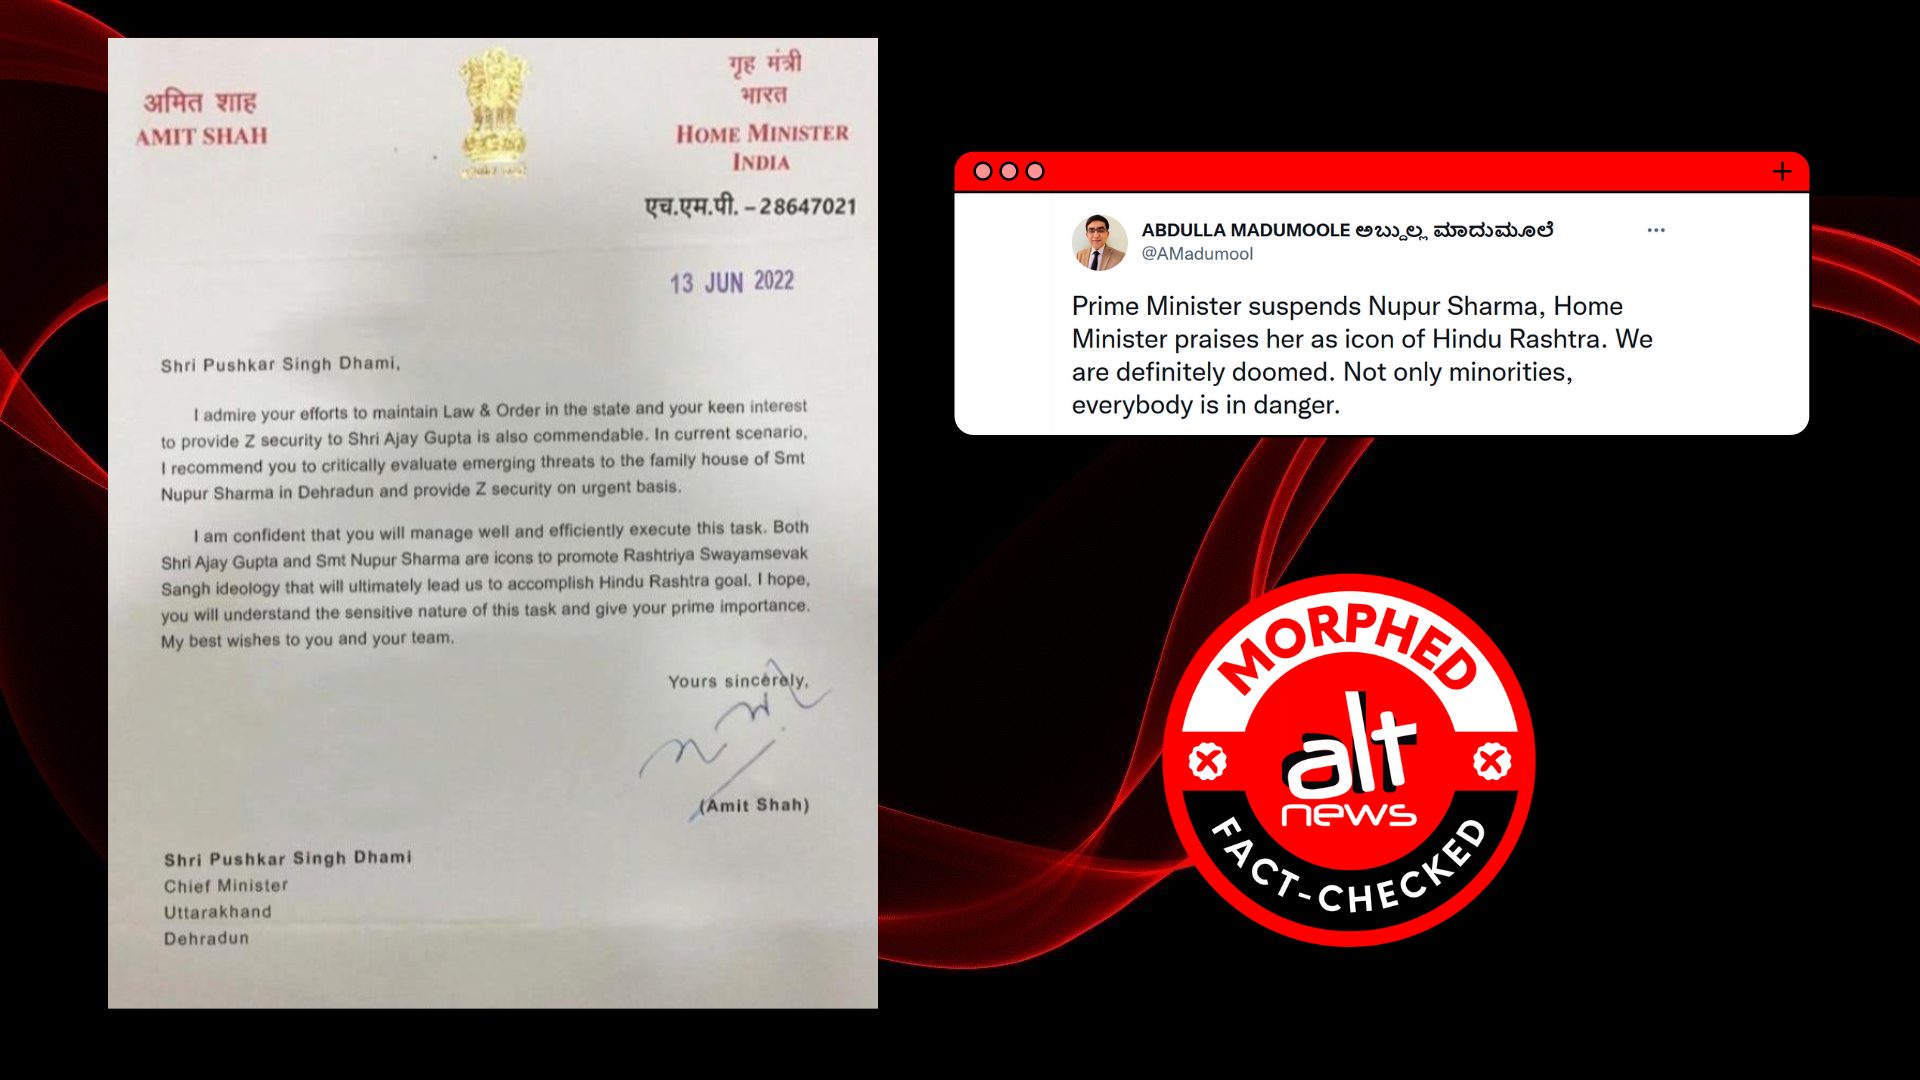 Fake letter portraying Amit Shah praising Nupur Sharma viral - Alt News